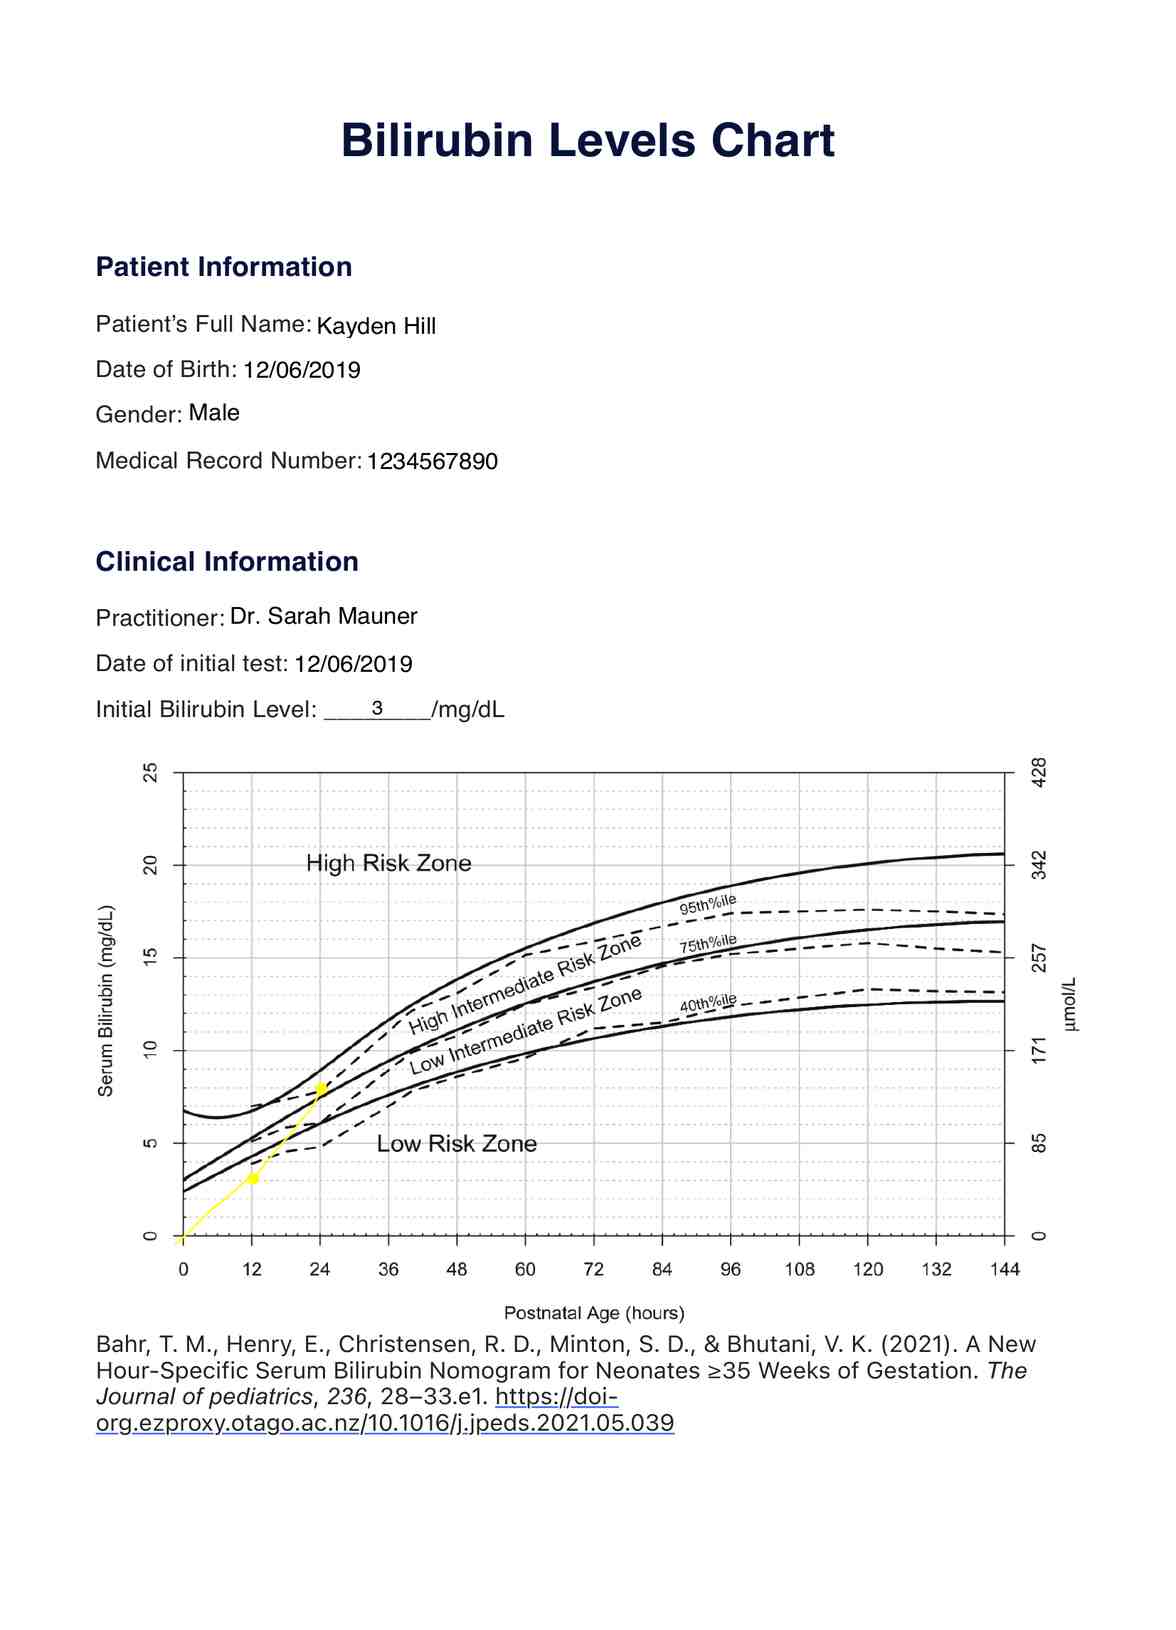 Bilirubin Levels PDF Example